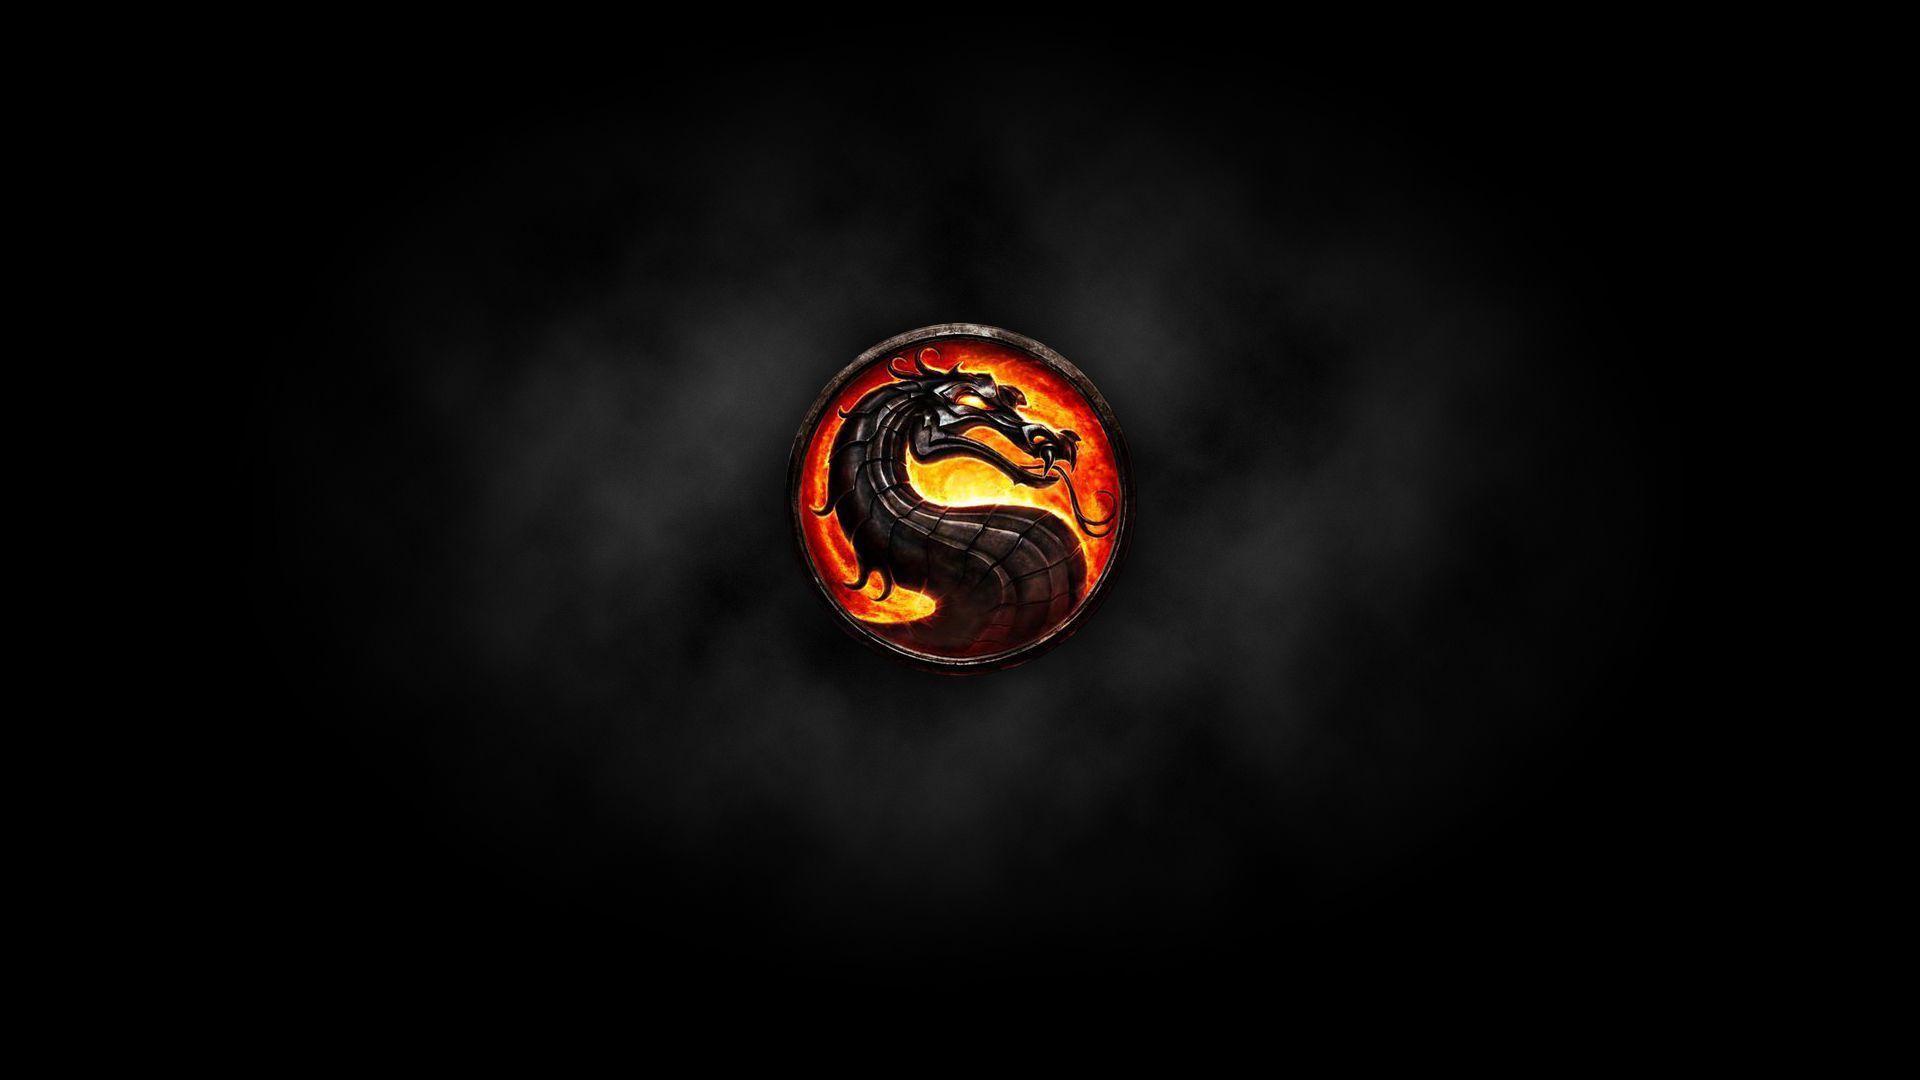 Mortal Kombat Desktop Wallpaper FREE on Latoro.com